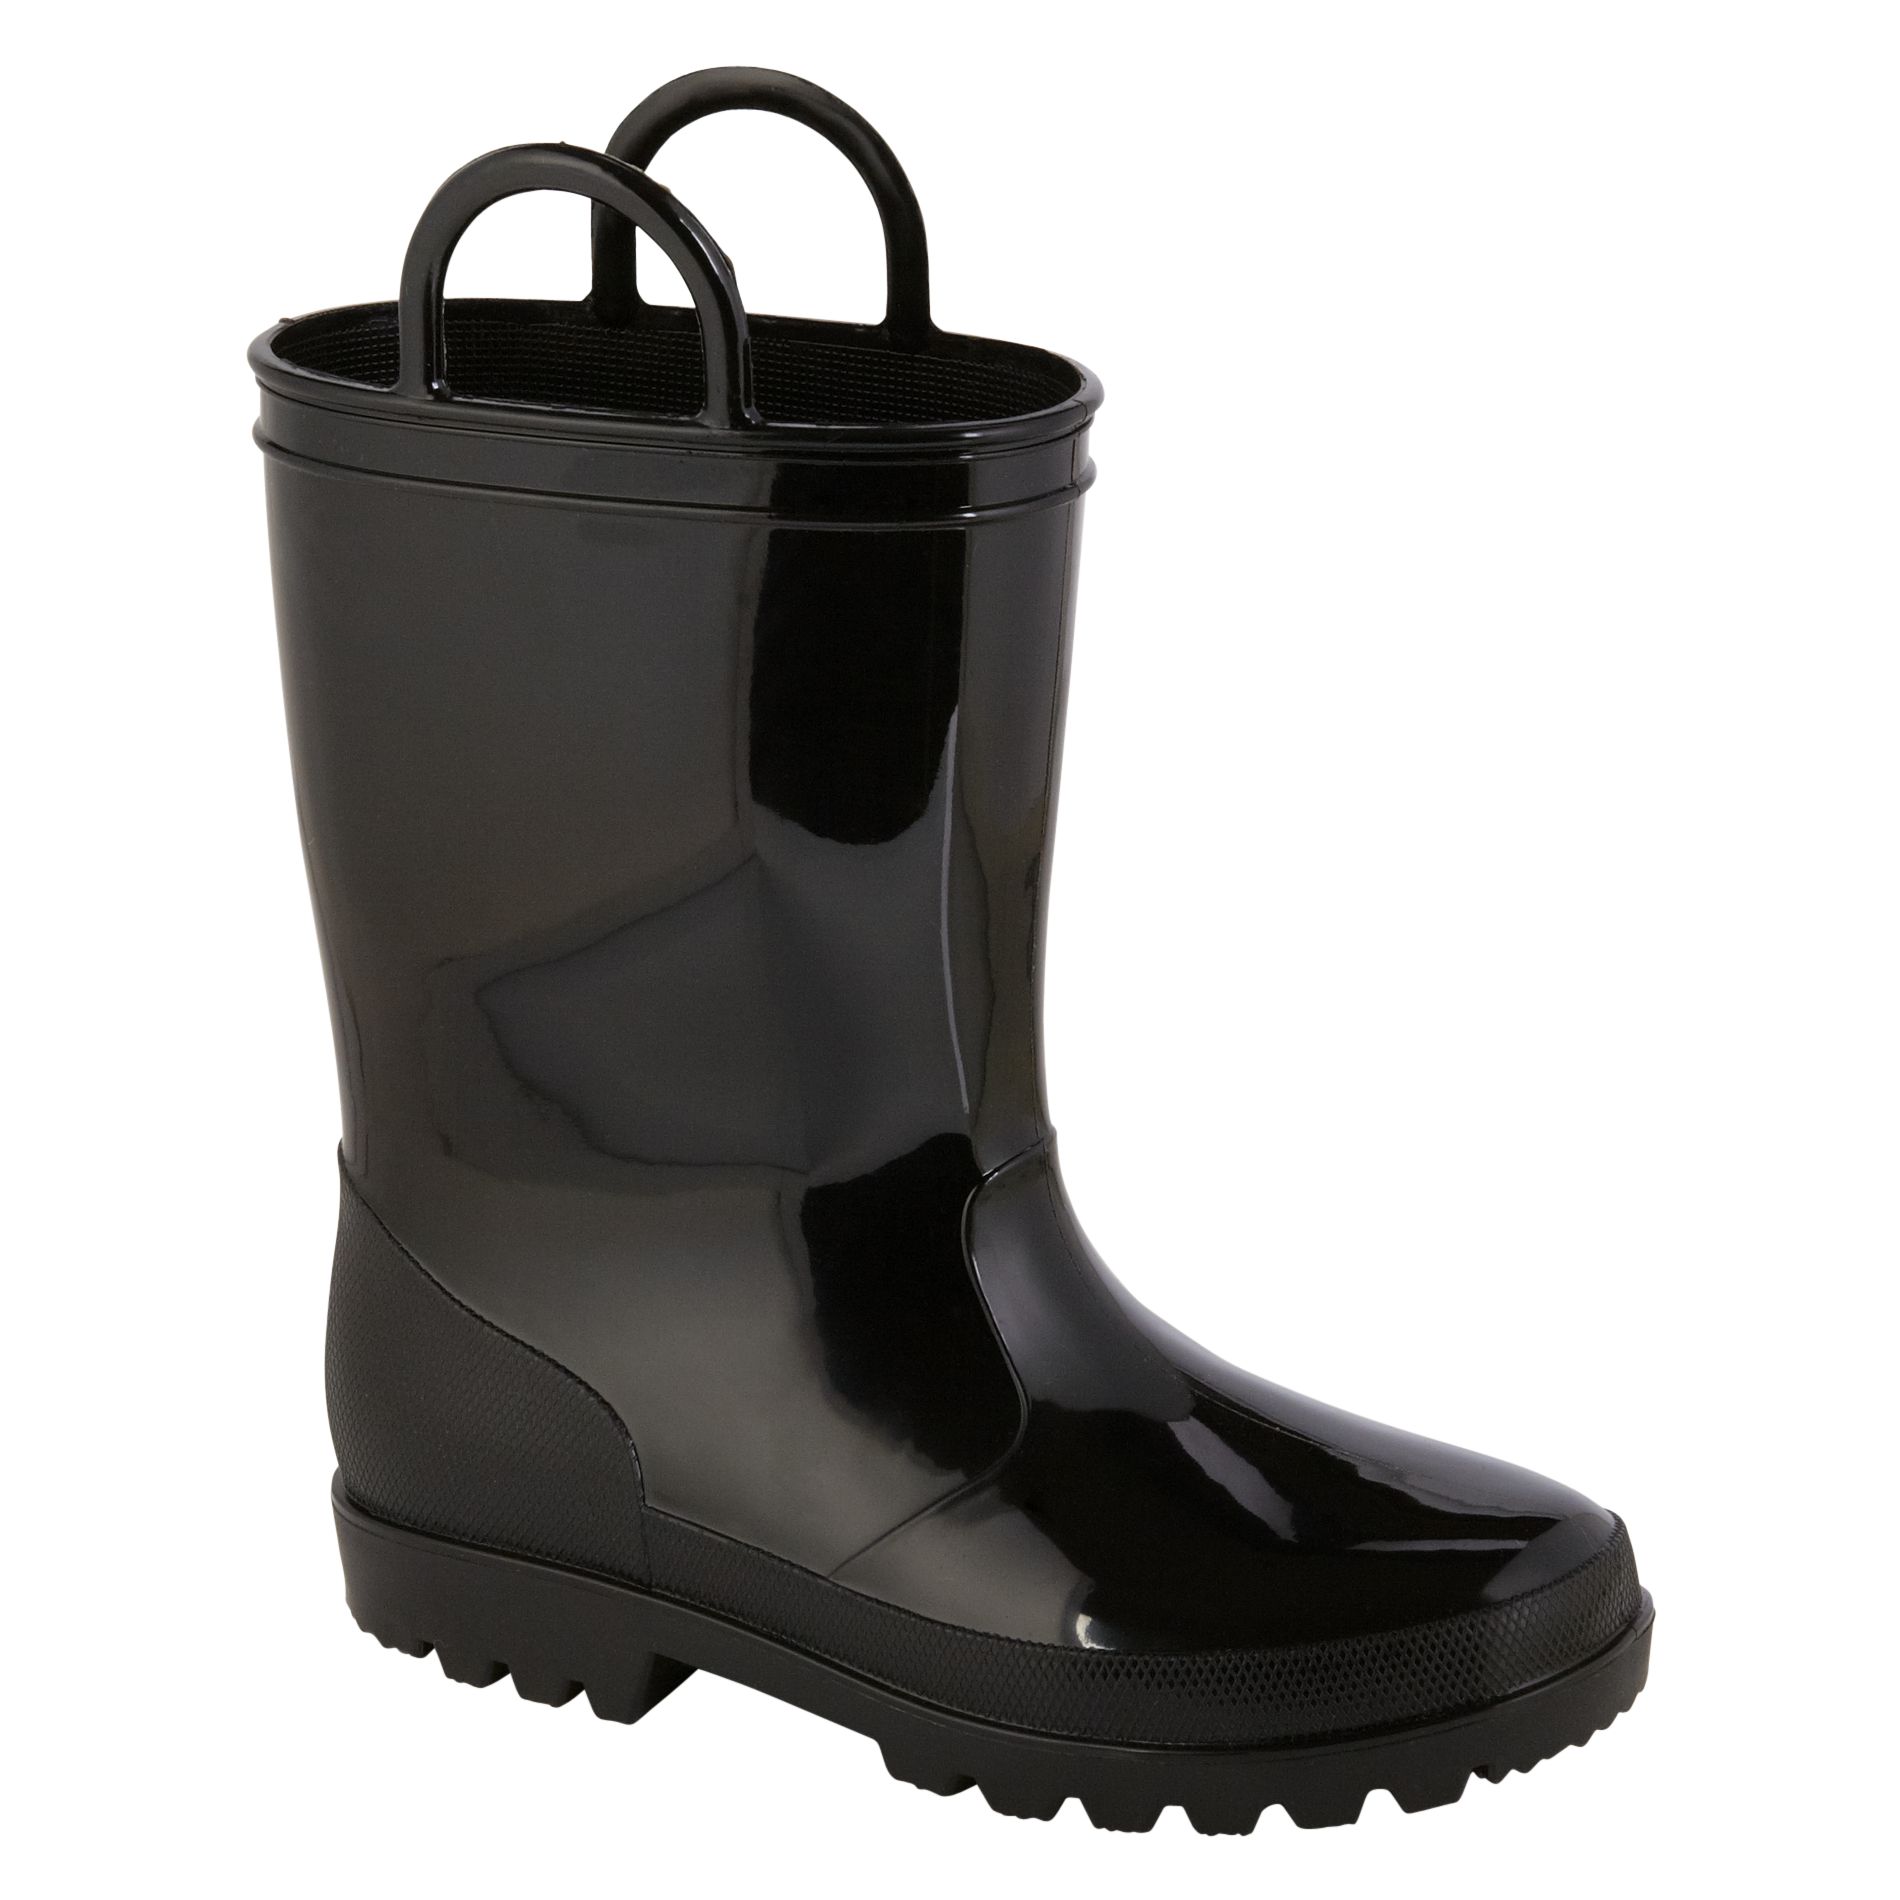 Cheap Rain Boots For Kids jZBDdcNe